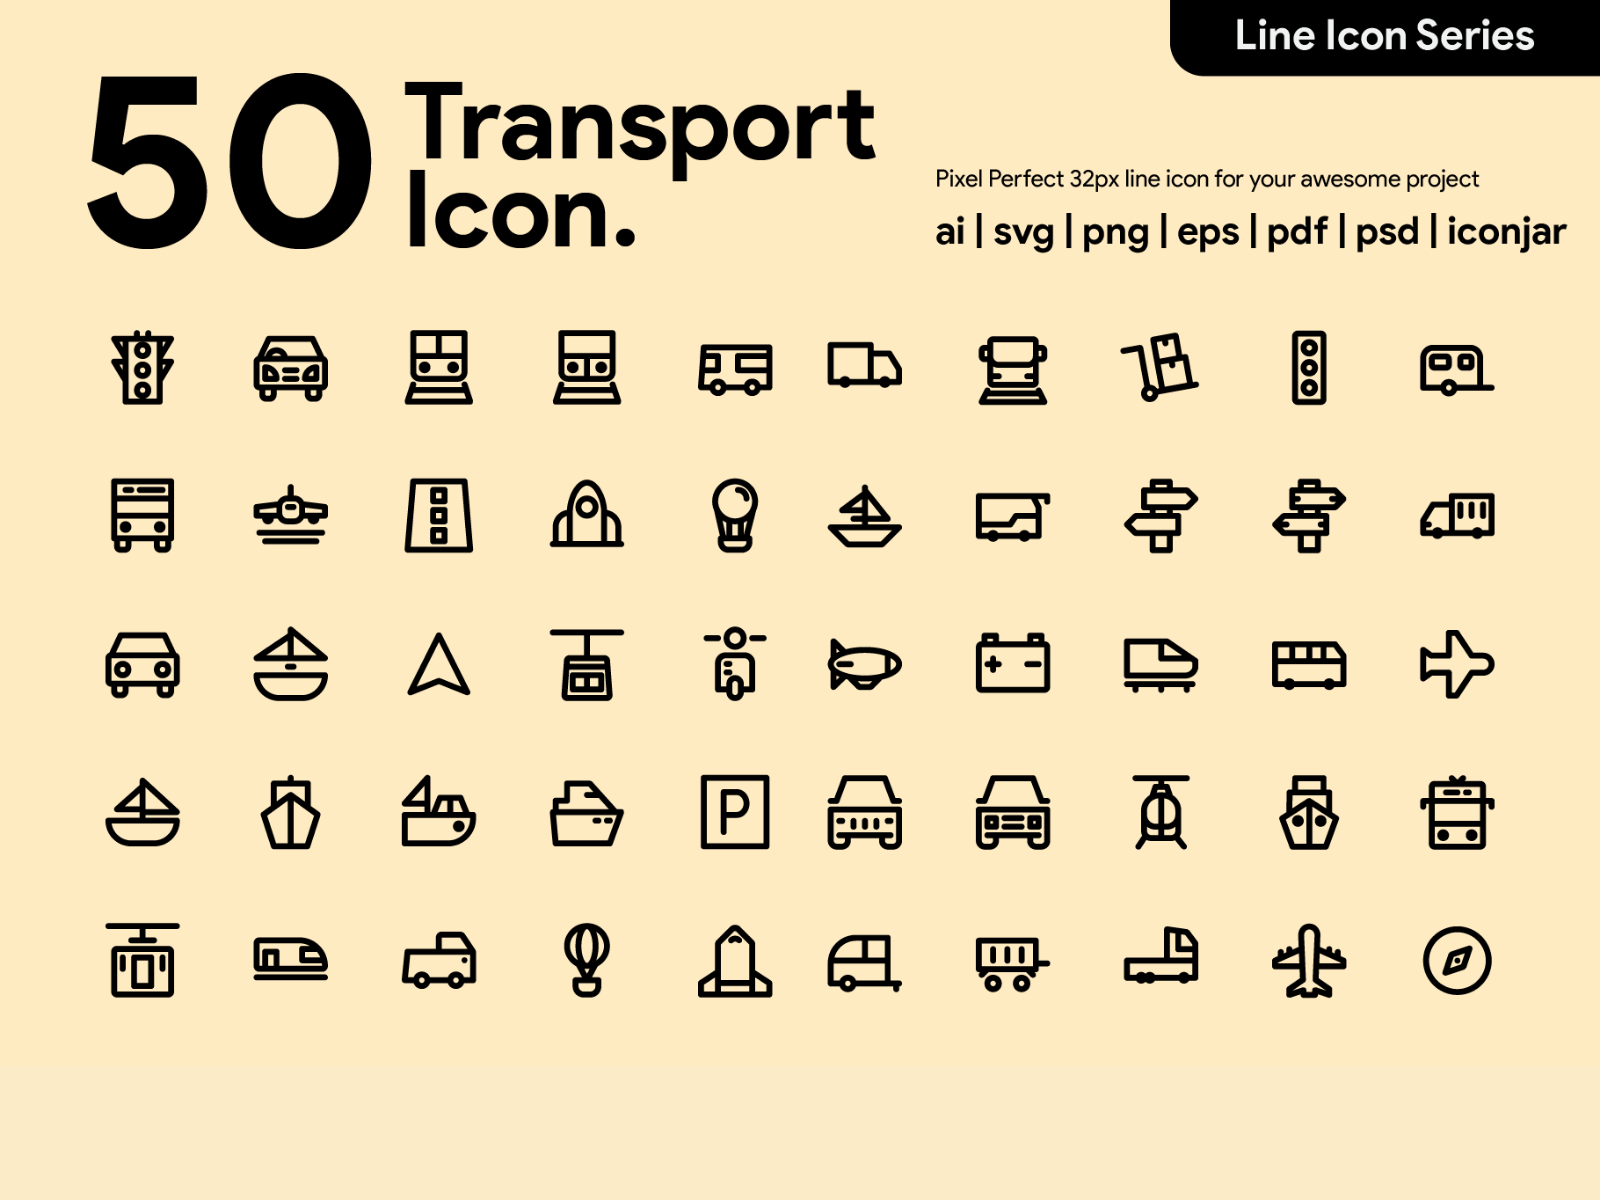 App icons design idea #326: Kawaicon - 50 transportation Line Icon